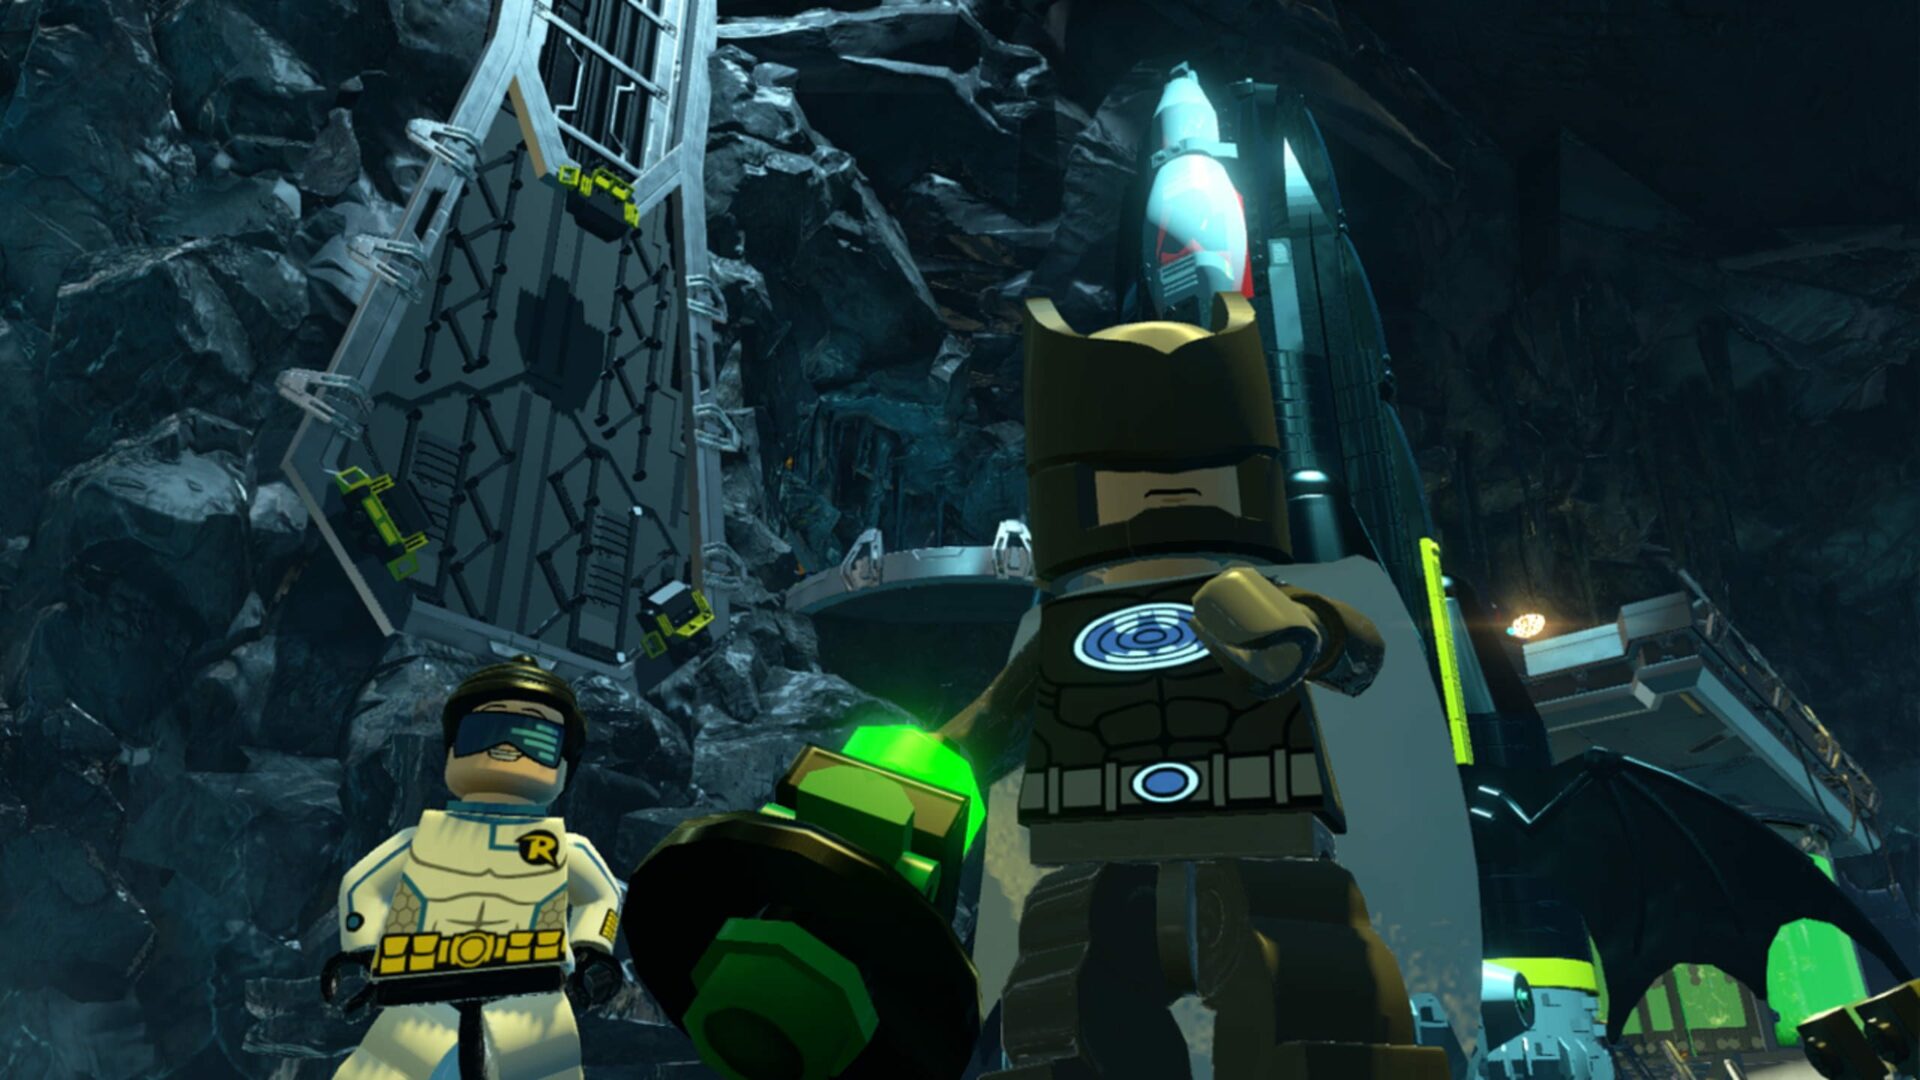 Códigos Lego Batman 3 